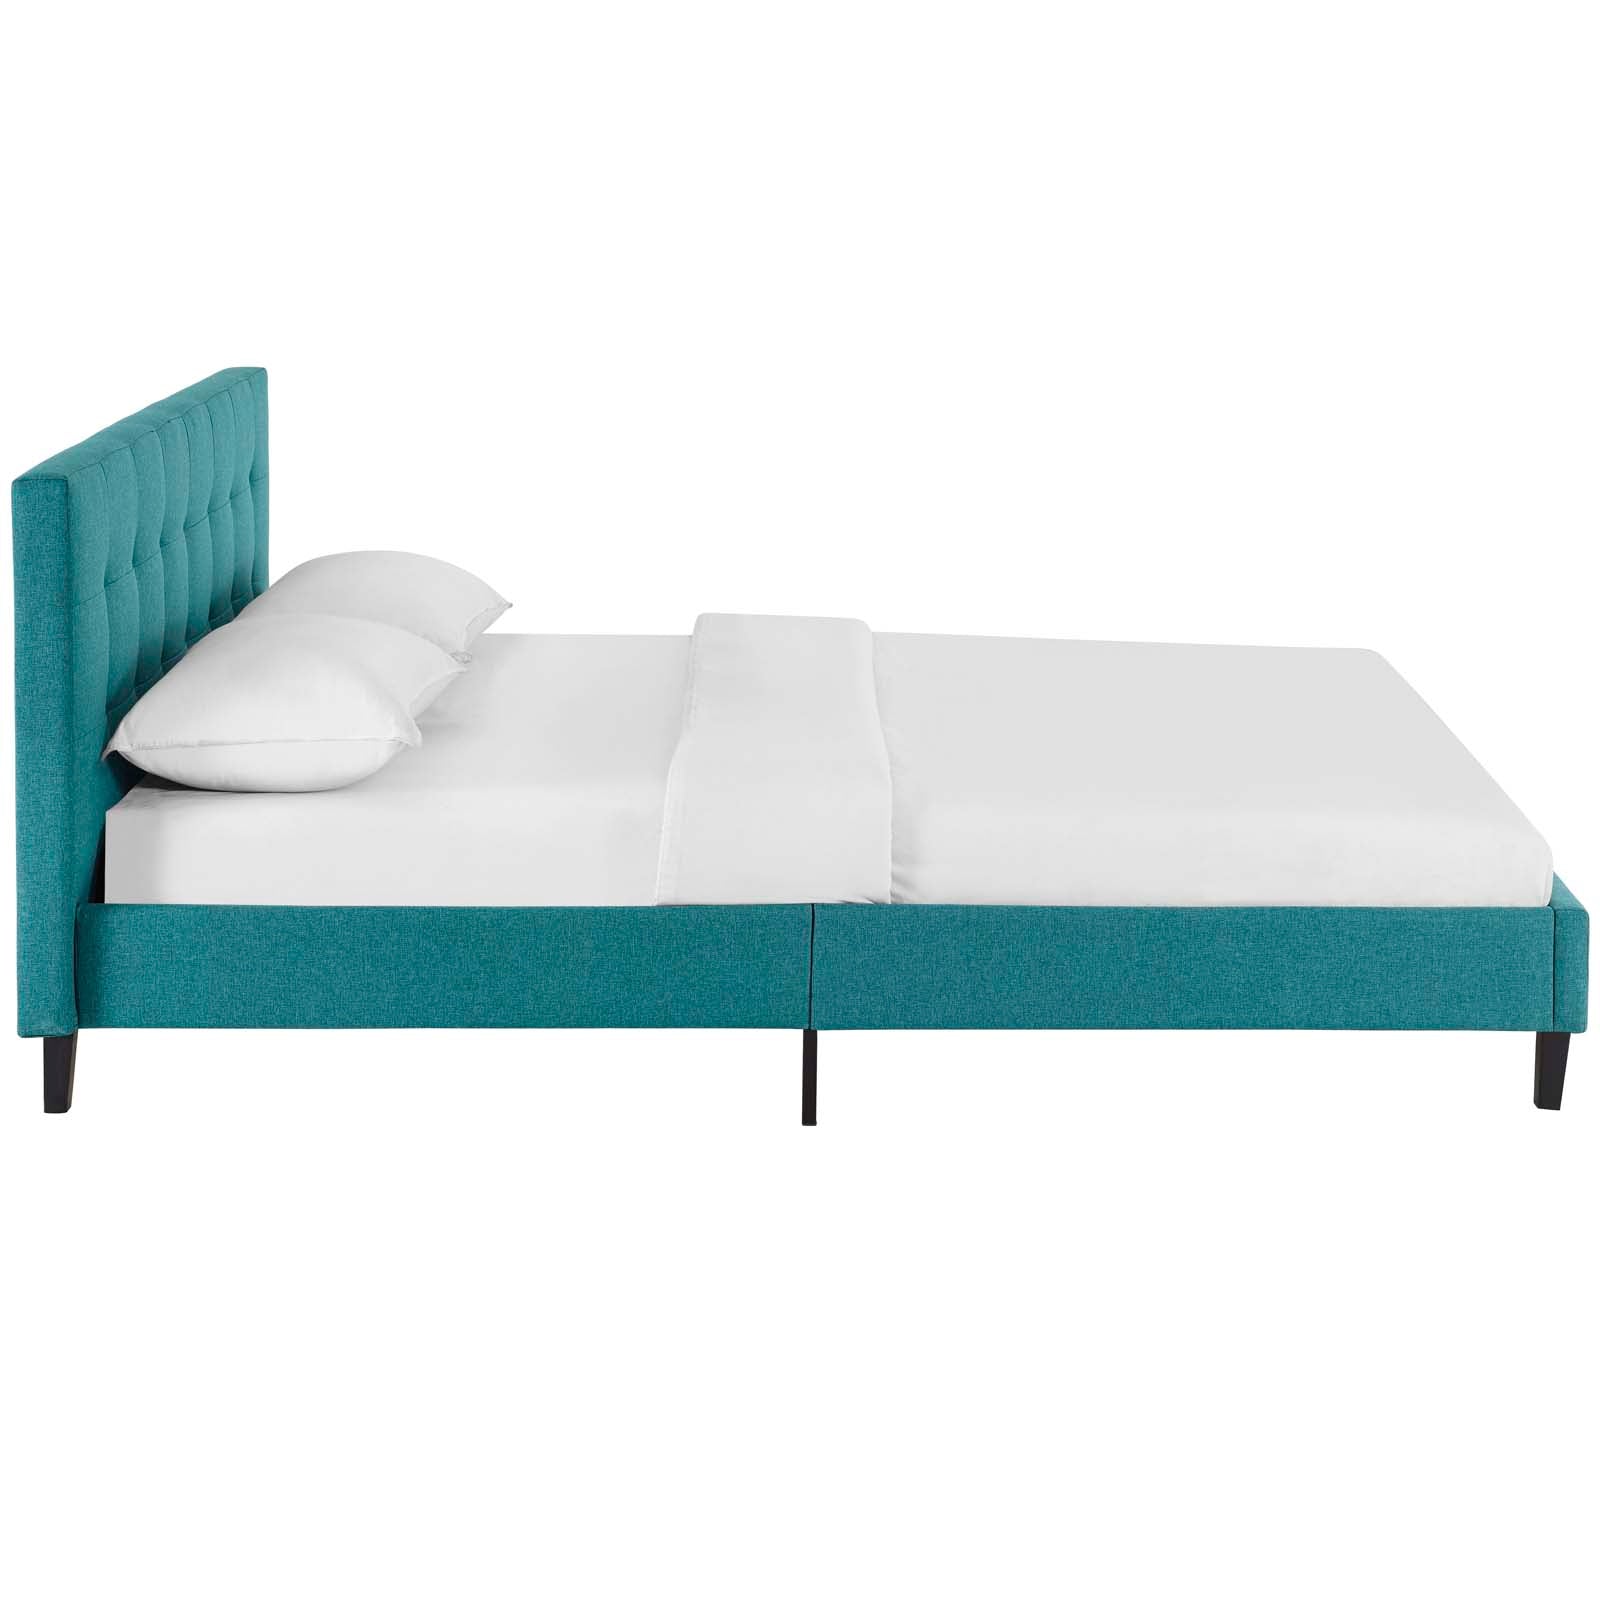 Modway Beds - Linnea Queen Bed Teal